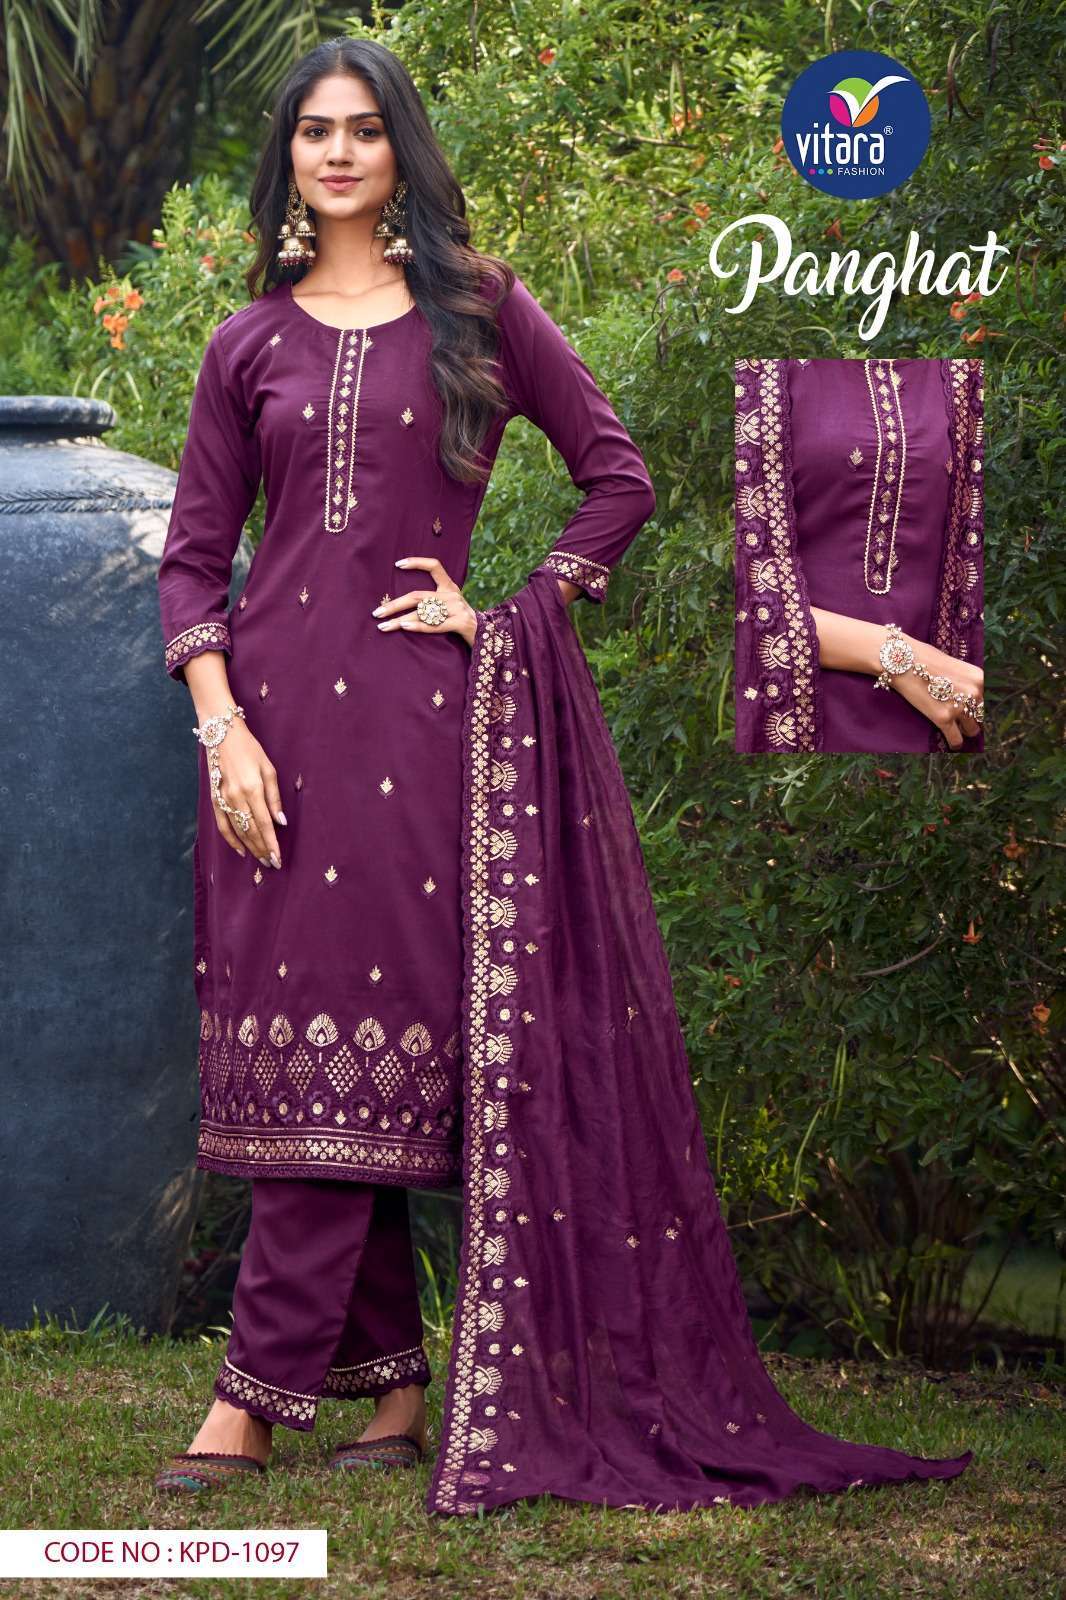 Vitara fashion PANGHAT Vol -1 Surat kurti wholesalers online